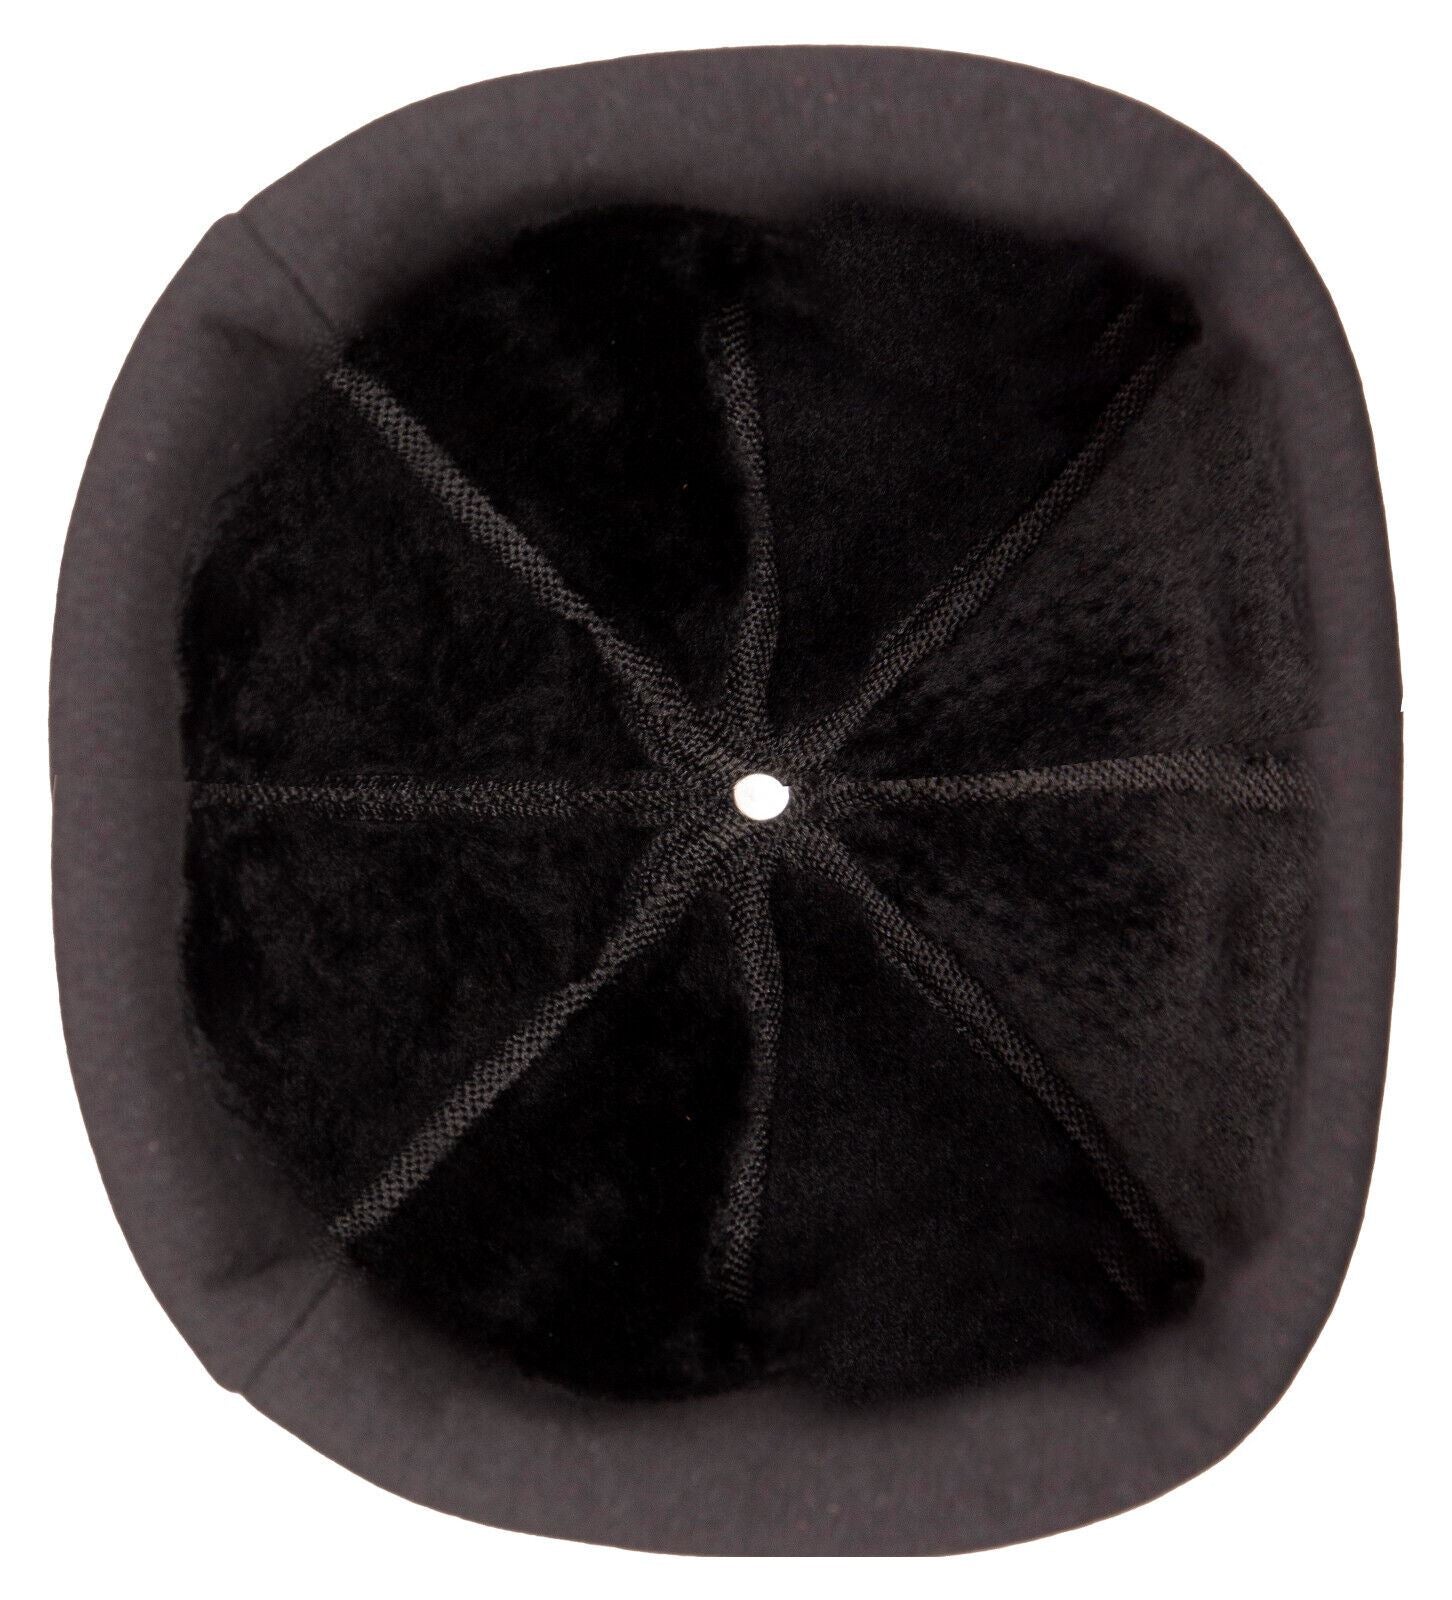 Mens Leather Black Beanie Hat 100% Sheepskin Winter 6 Panel Hat One size - Upperclass Fashions 